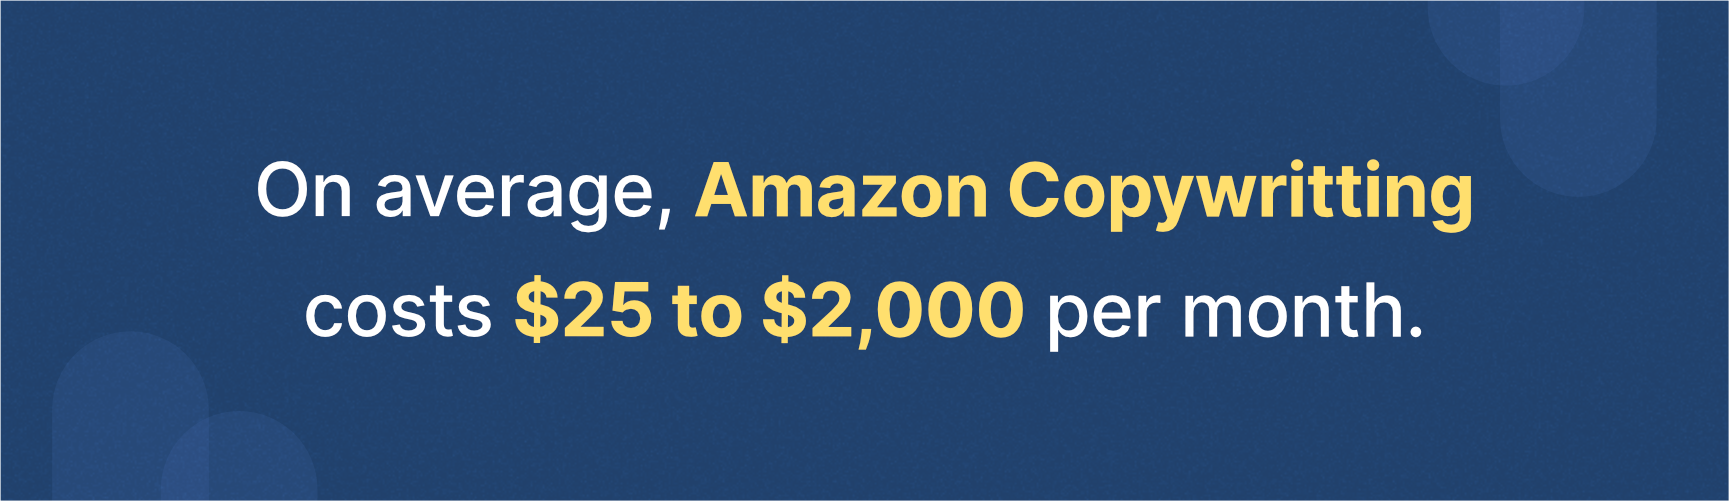 average Amazon copywriting costs